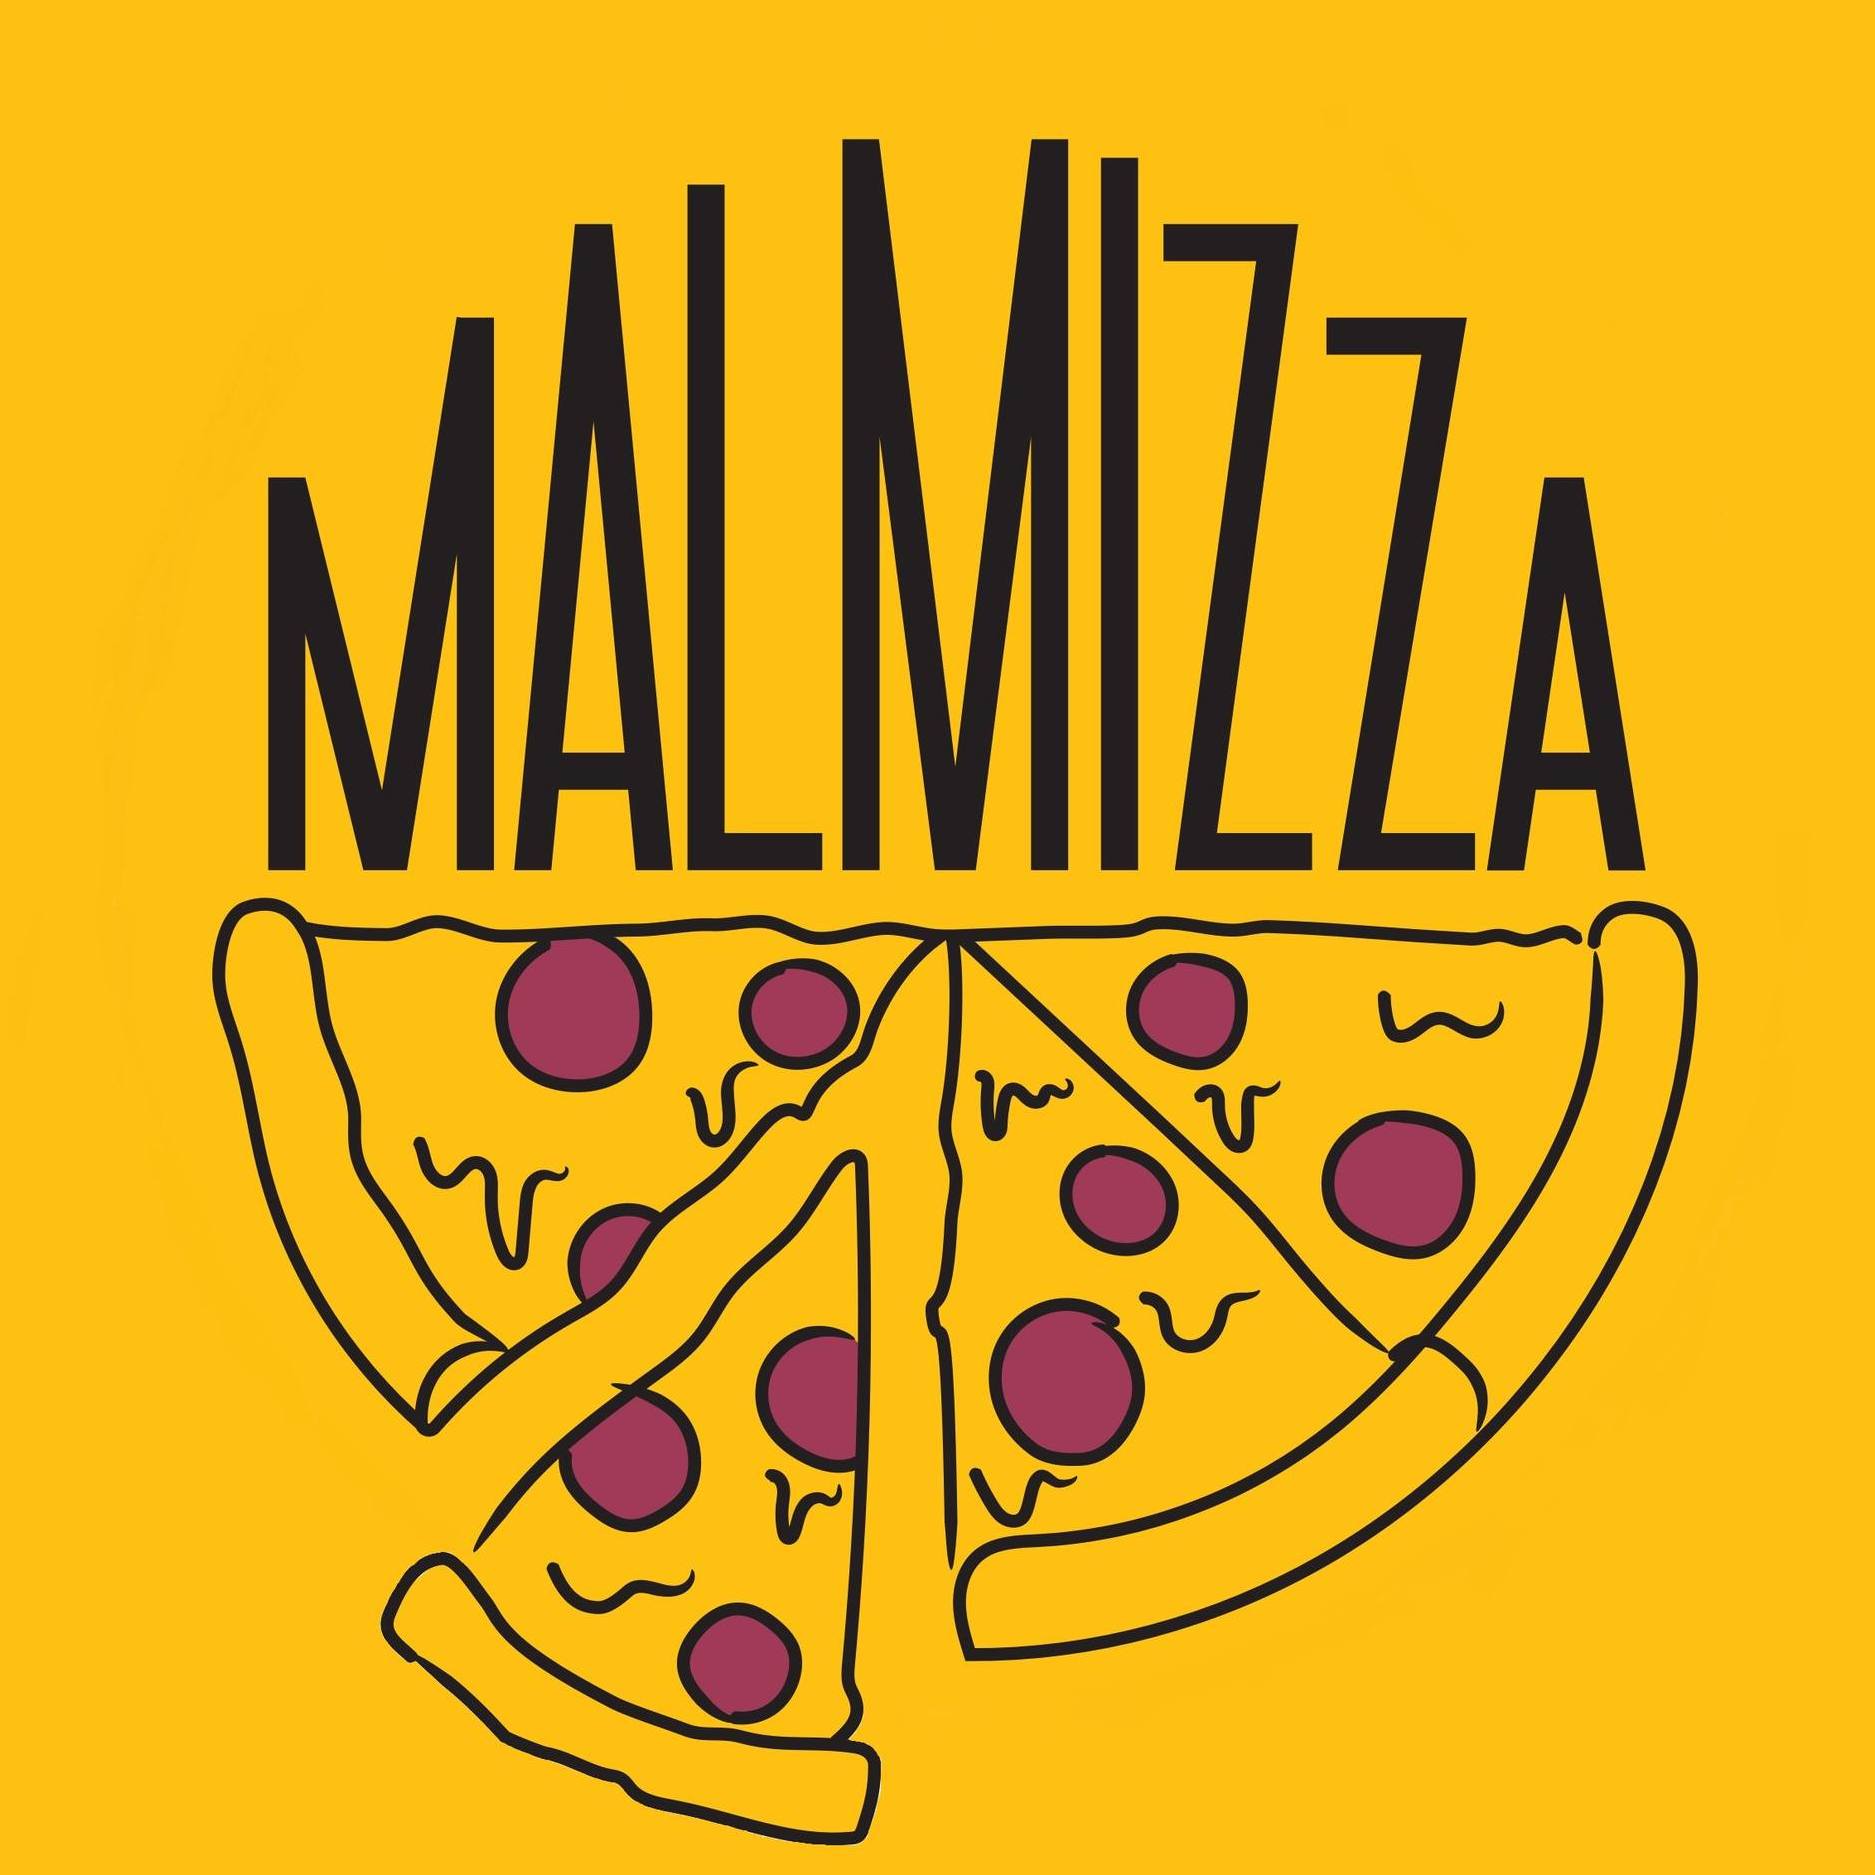 Malmizza - pilt